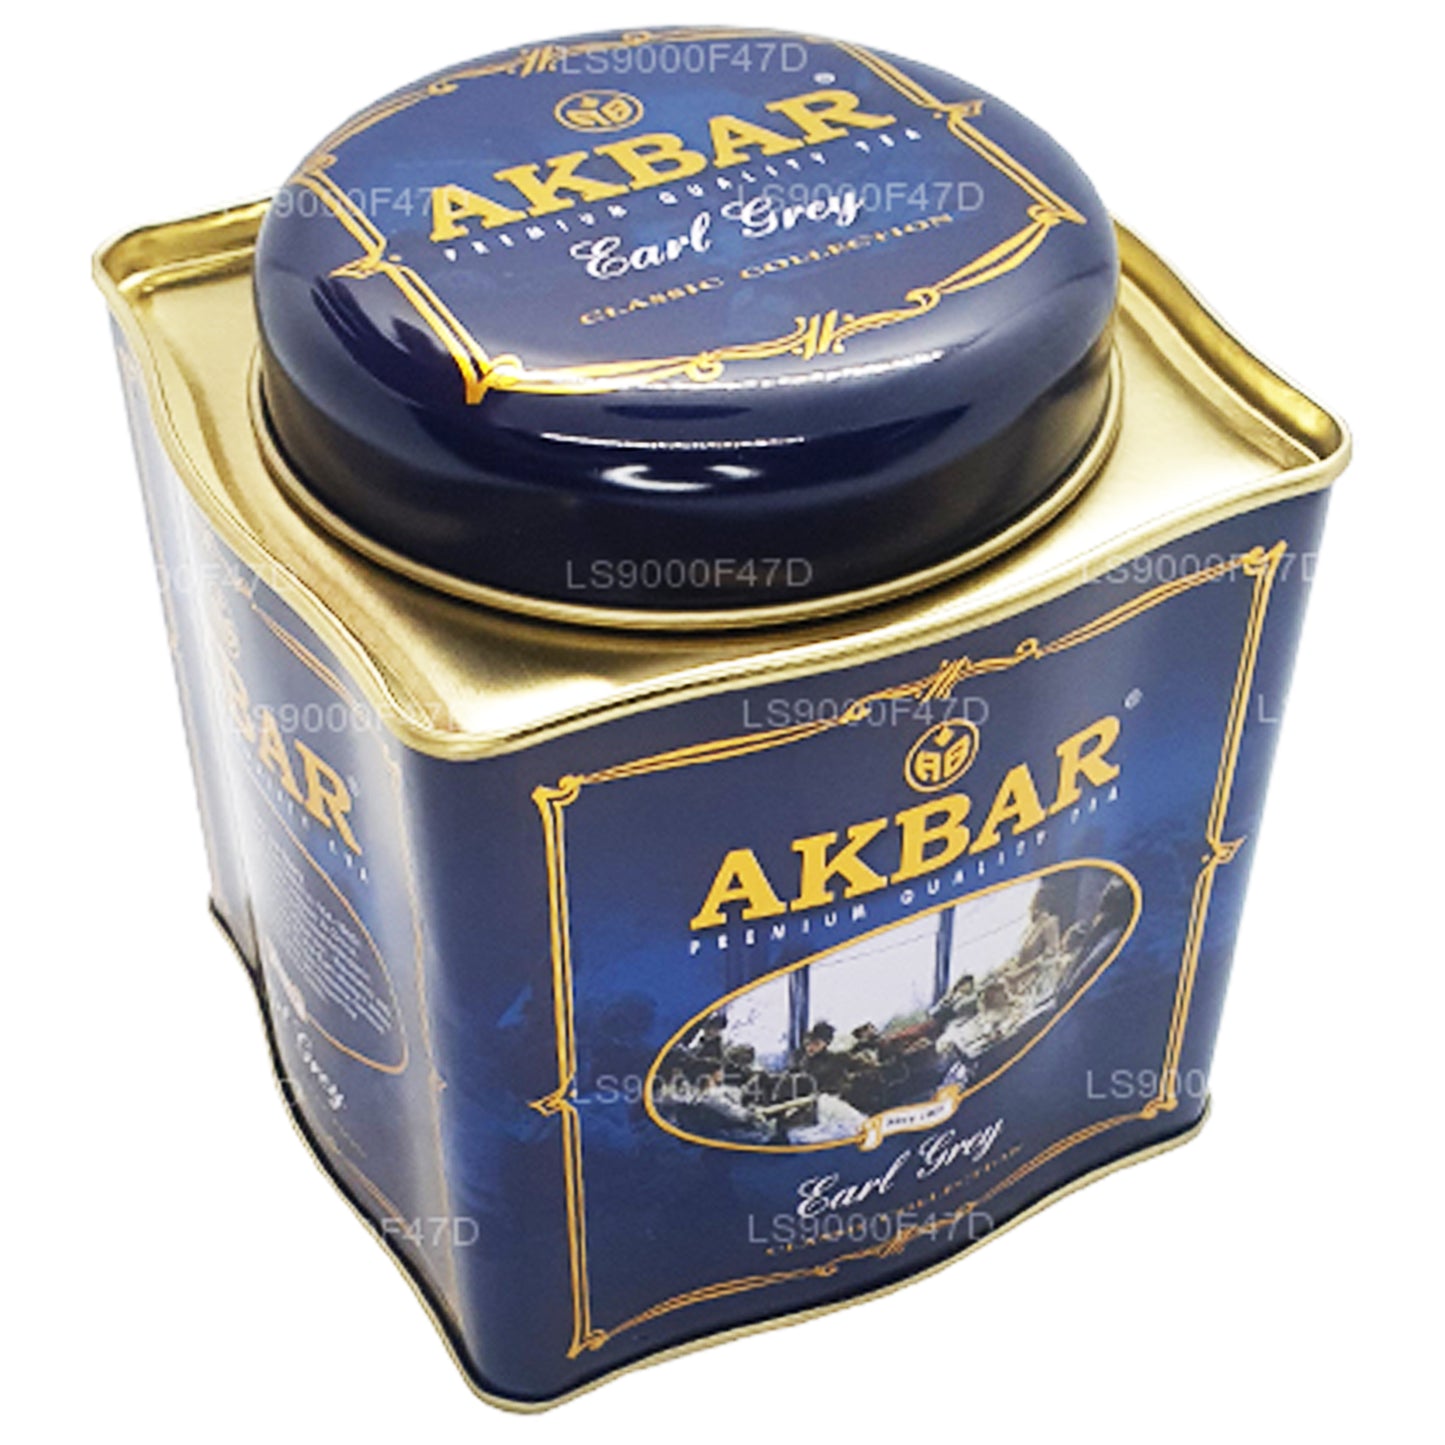 Akbar Classic Earl Grey Herbata liściasta (250g) puszka